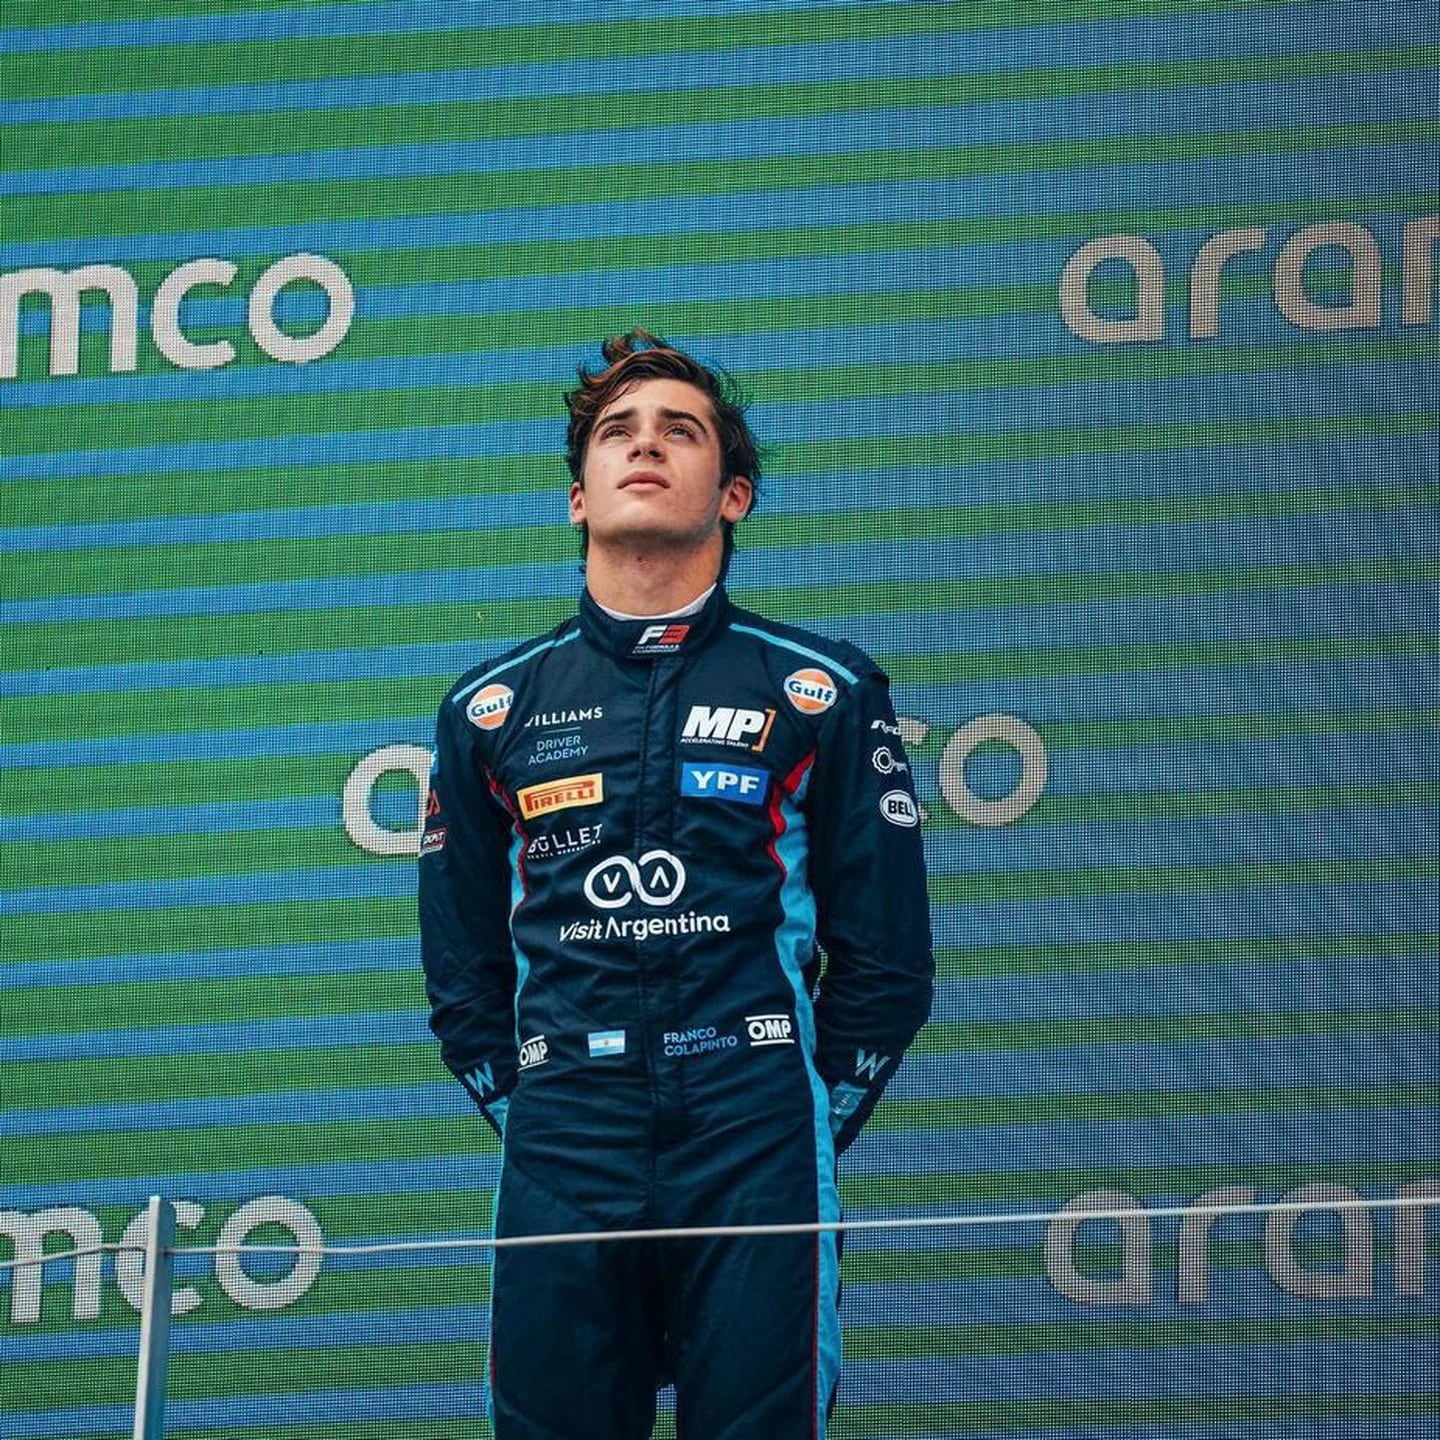 ¿Franco Colapinto llega a la Fórmula 1? | Canal Showsport